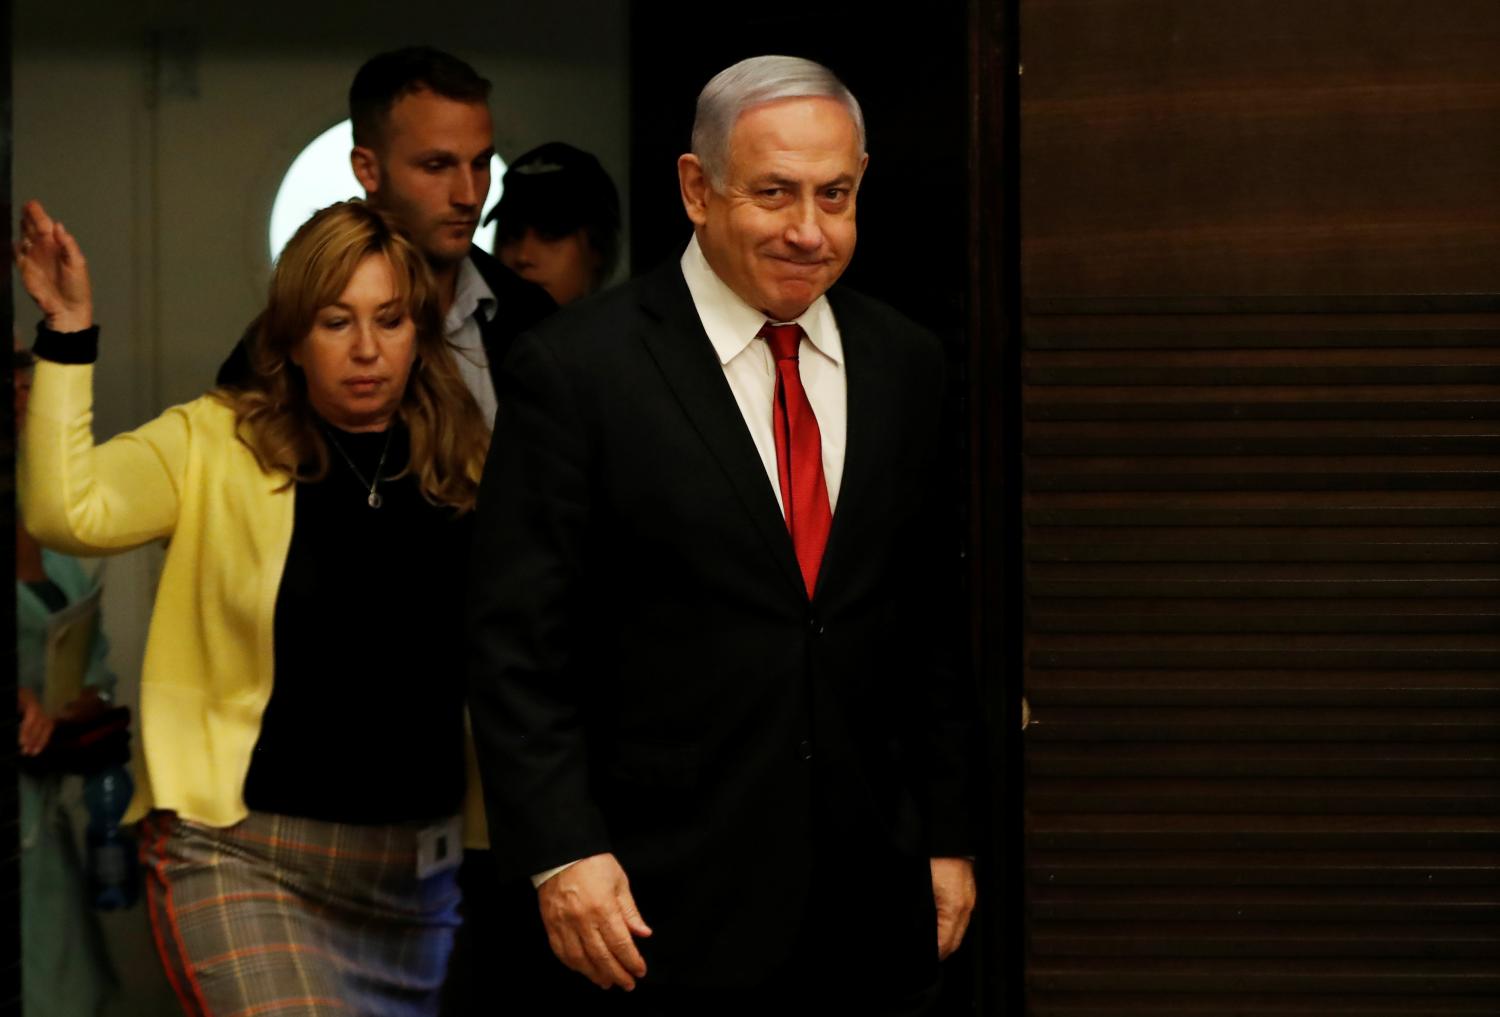 Israeli Prime Minister Benjamin Netanyahu arrives to deliver a statement during a news conference in Jerusalem September 18, 2019. REUTERS/Ronen Zvulun - RC164DDDFFF0